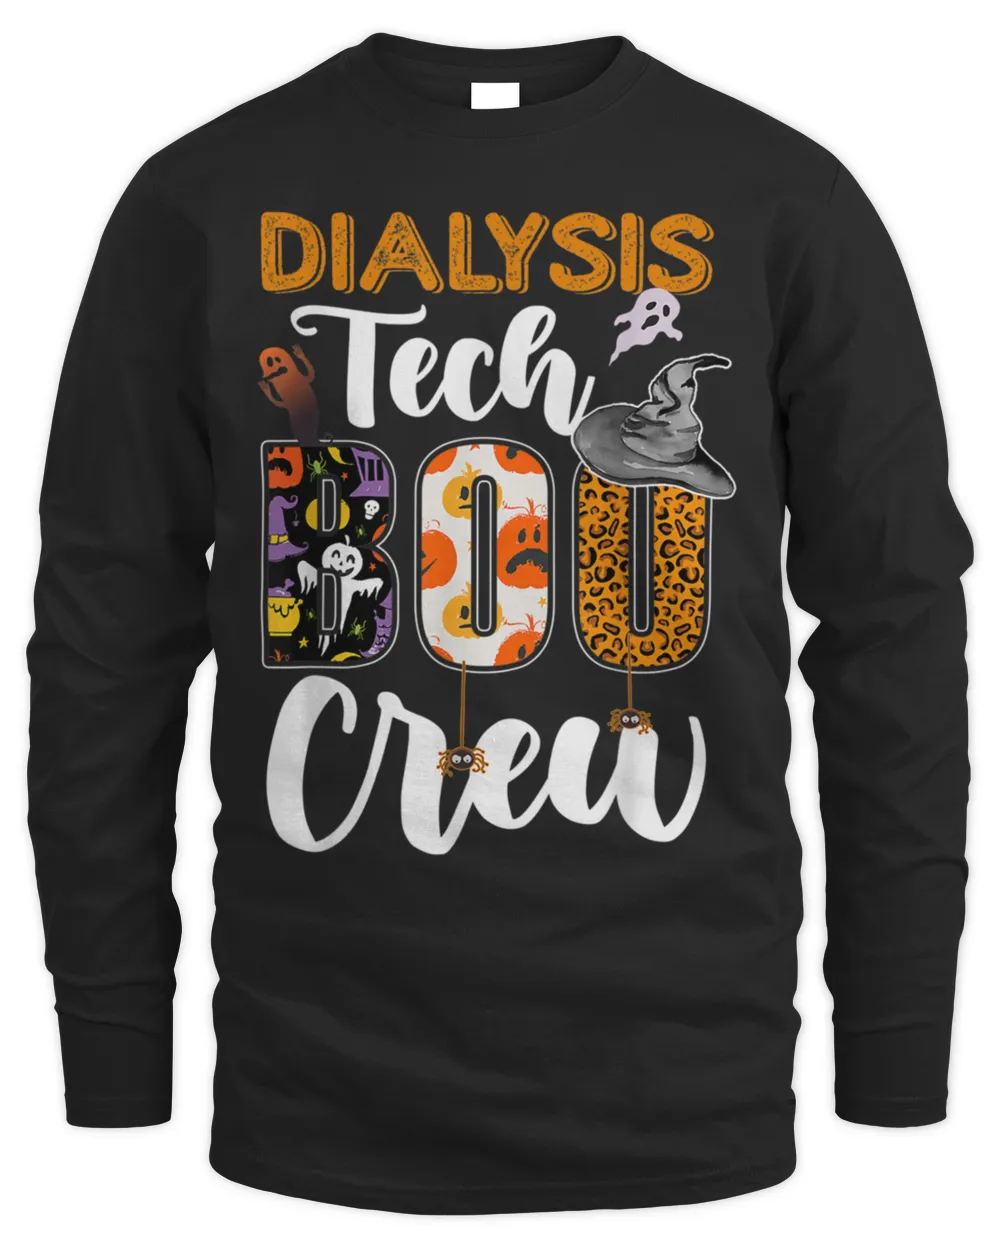 Dialysis Tech Boo Crew Technician Halloween Matching Costume TShirt T-Shirt